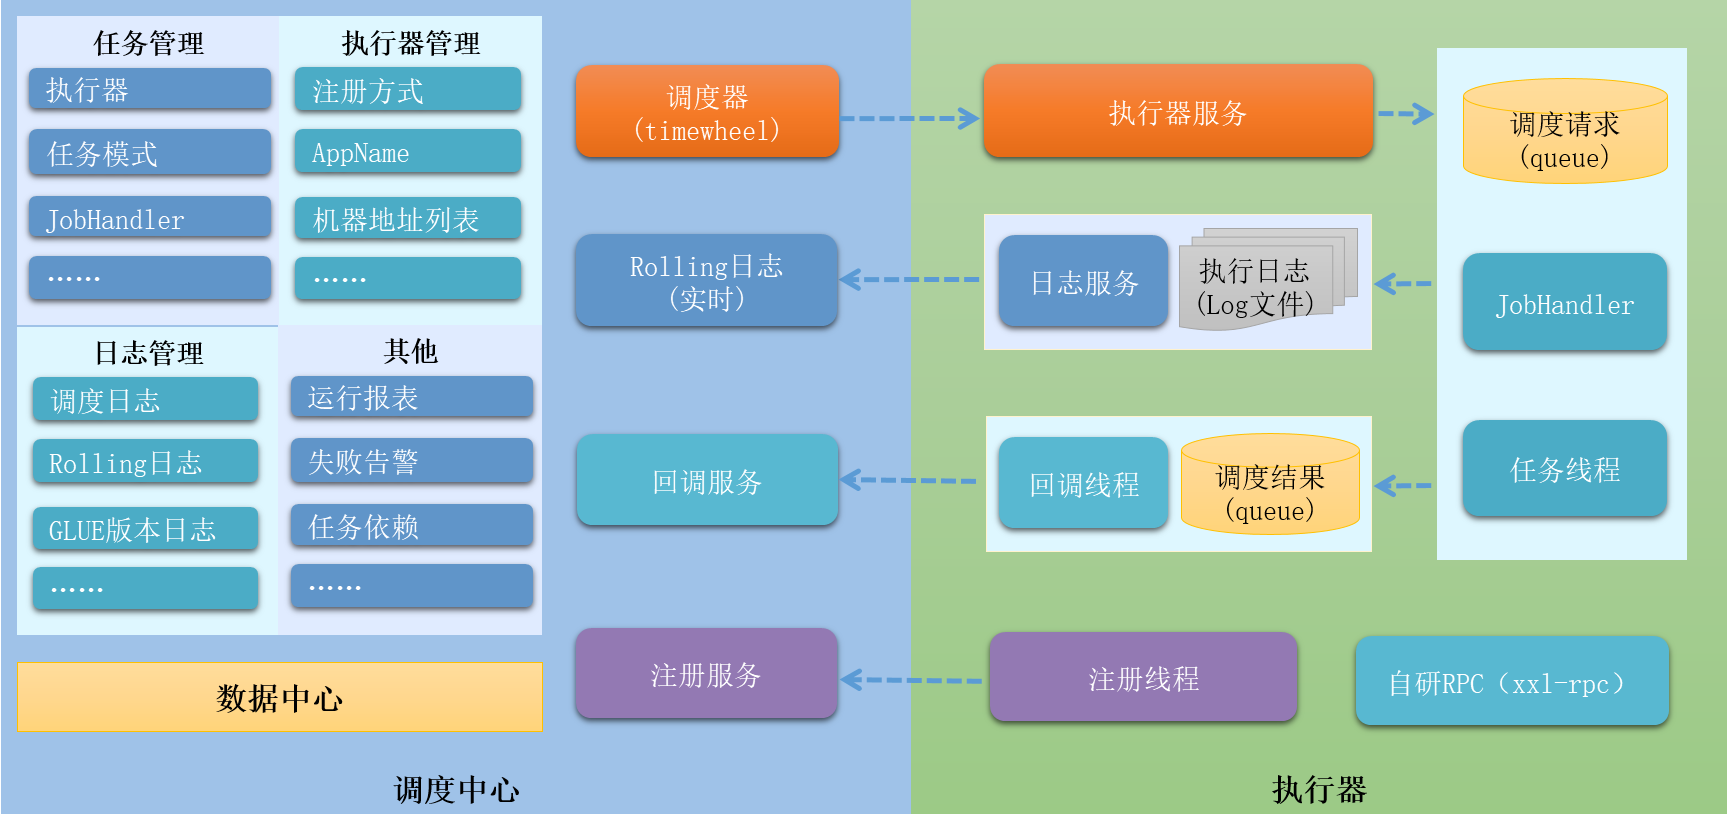 xxl-job 2.3.0 architecture diagram